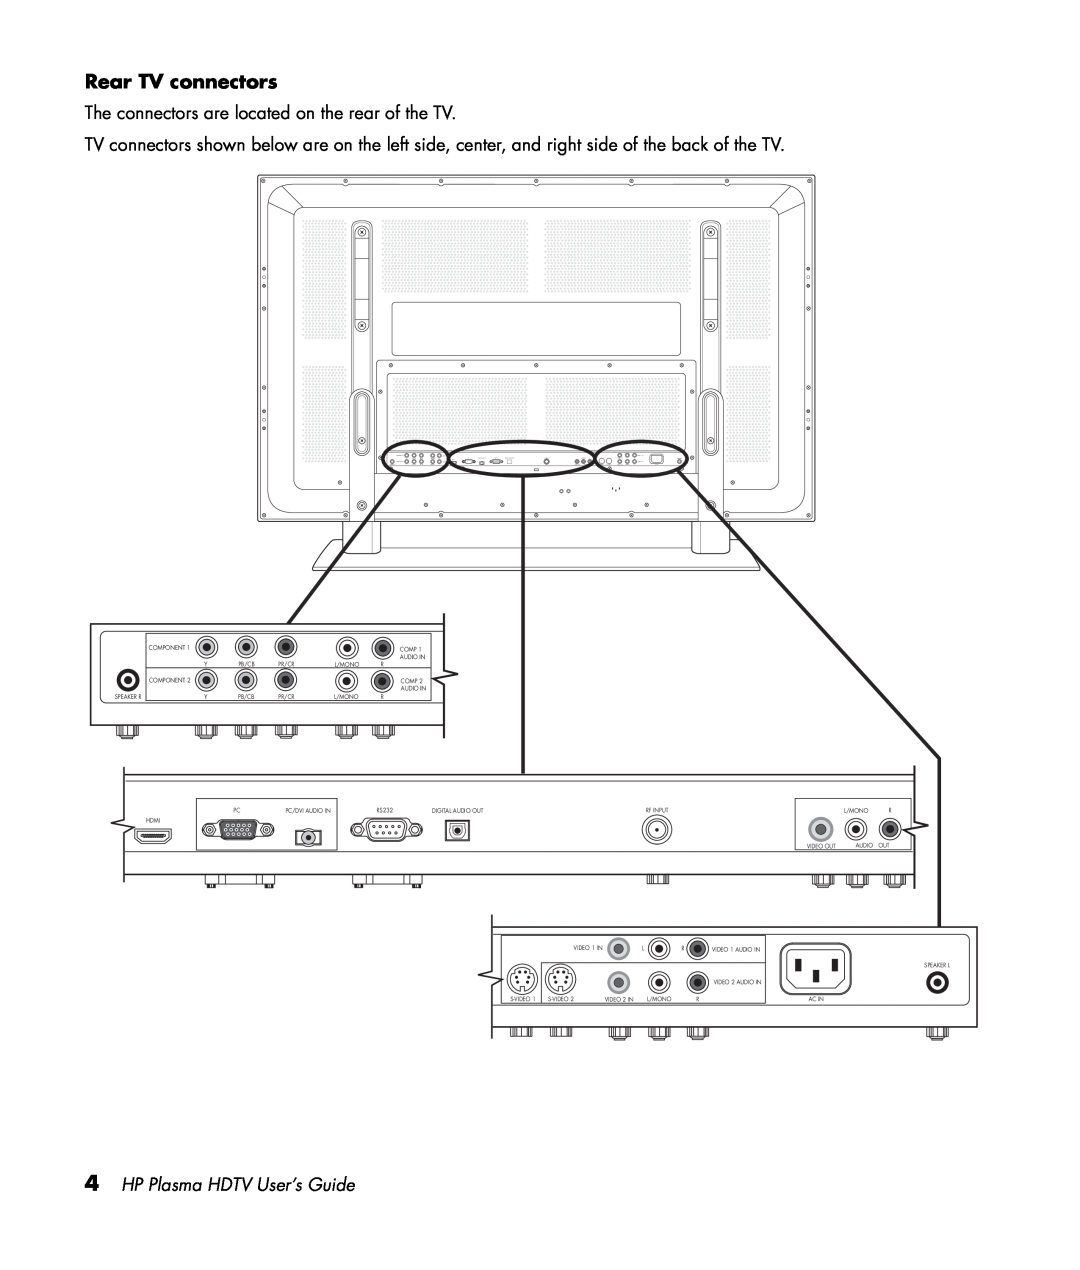 HP PL5060N 50 inch Plasma, PL4260N 42 inch Plasma manual Rear TV connectors, HP Plasma HDTV User’s Guide 